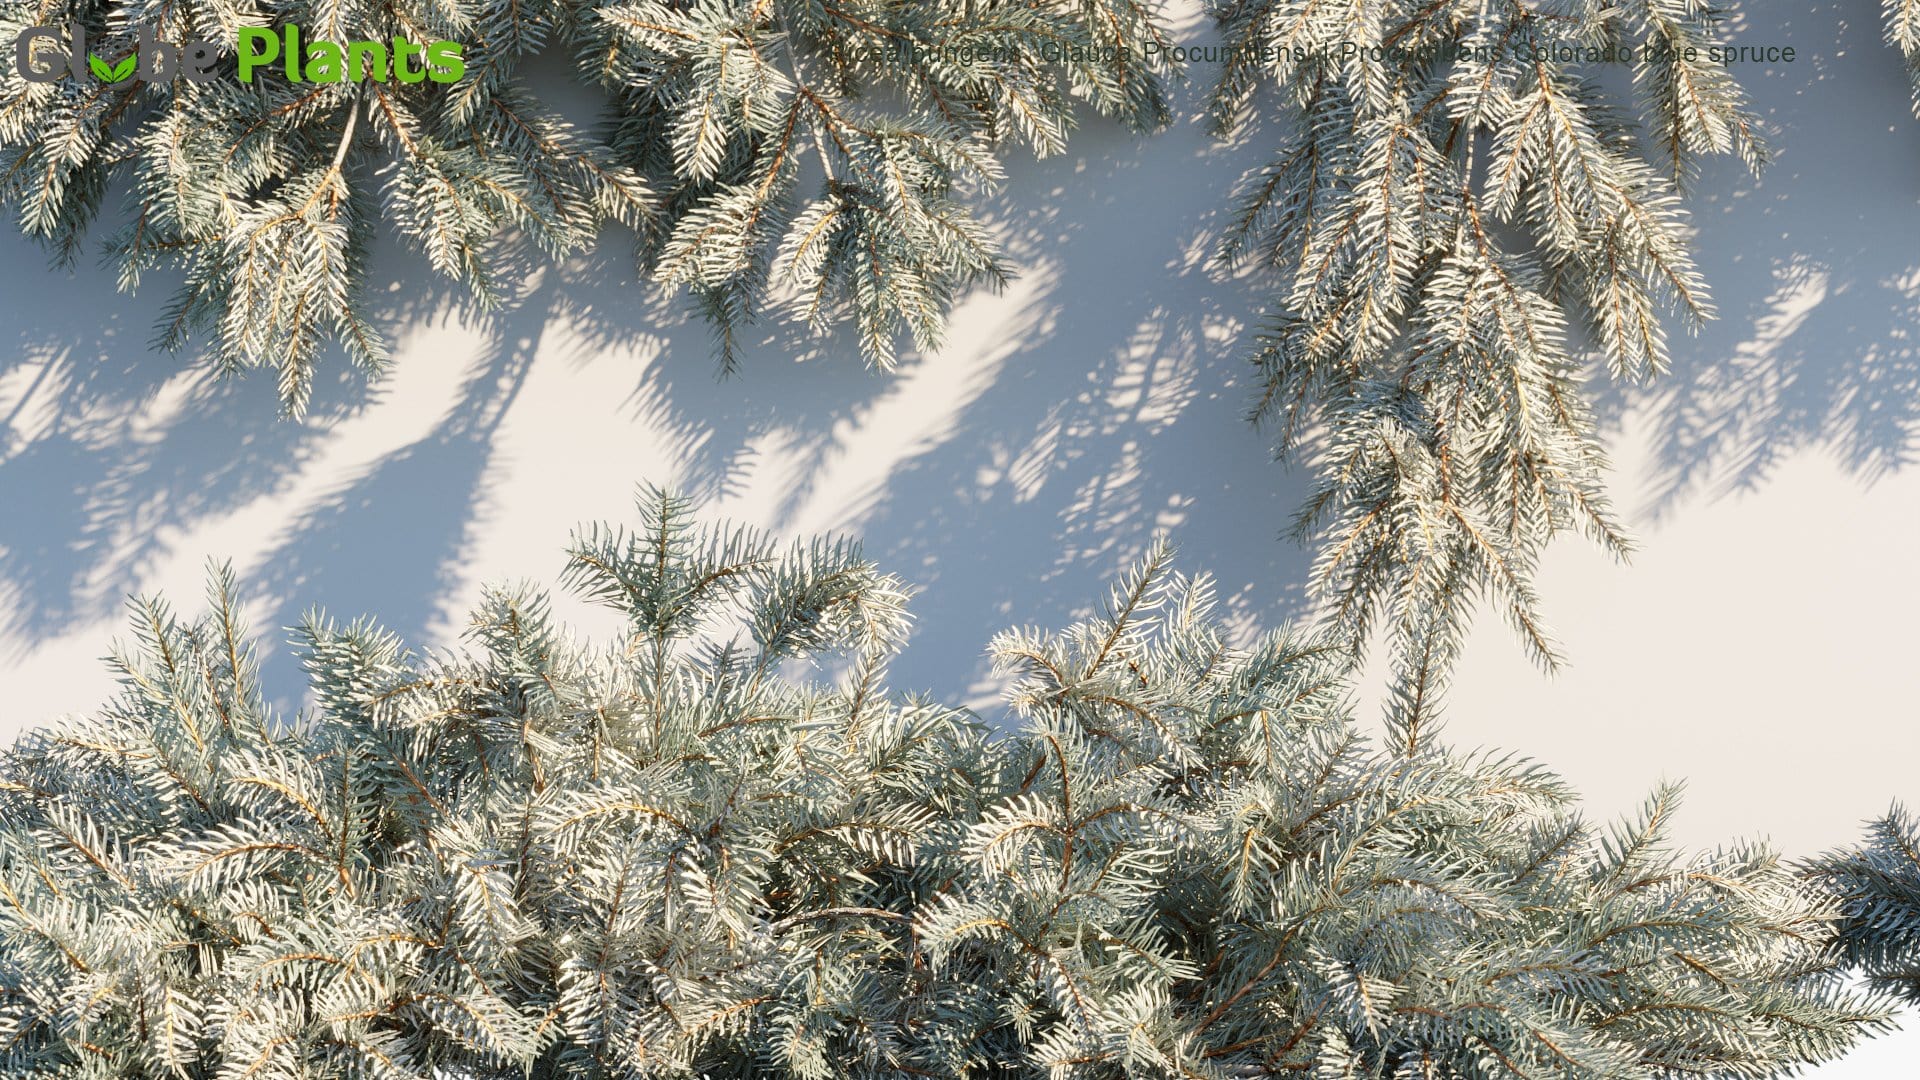 Picea Pungens 'Glauca Procumbens' - Procumbens Colorado Blue Spruce (3D Model)